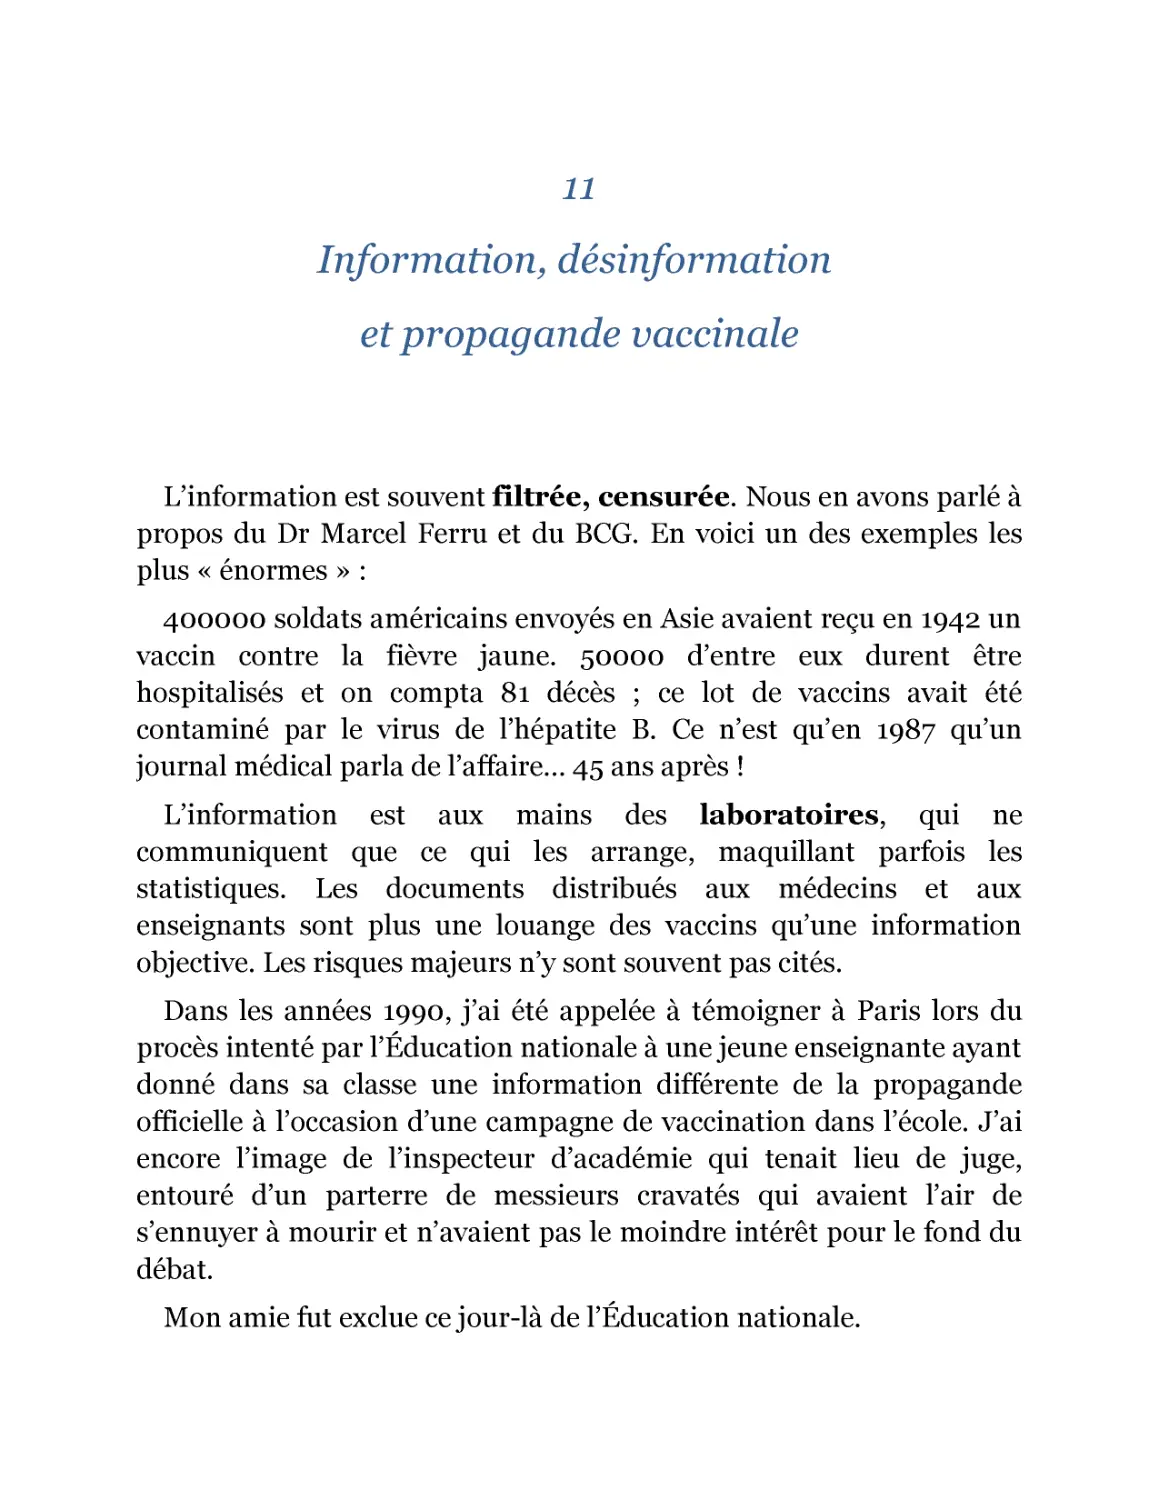 ﻿11. Information, désinformation et propagande vaccinal